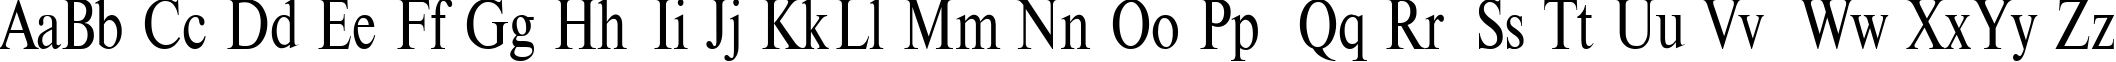 Пример написания английского алфавита шрифтом TimesET 85n